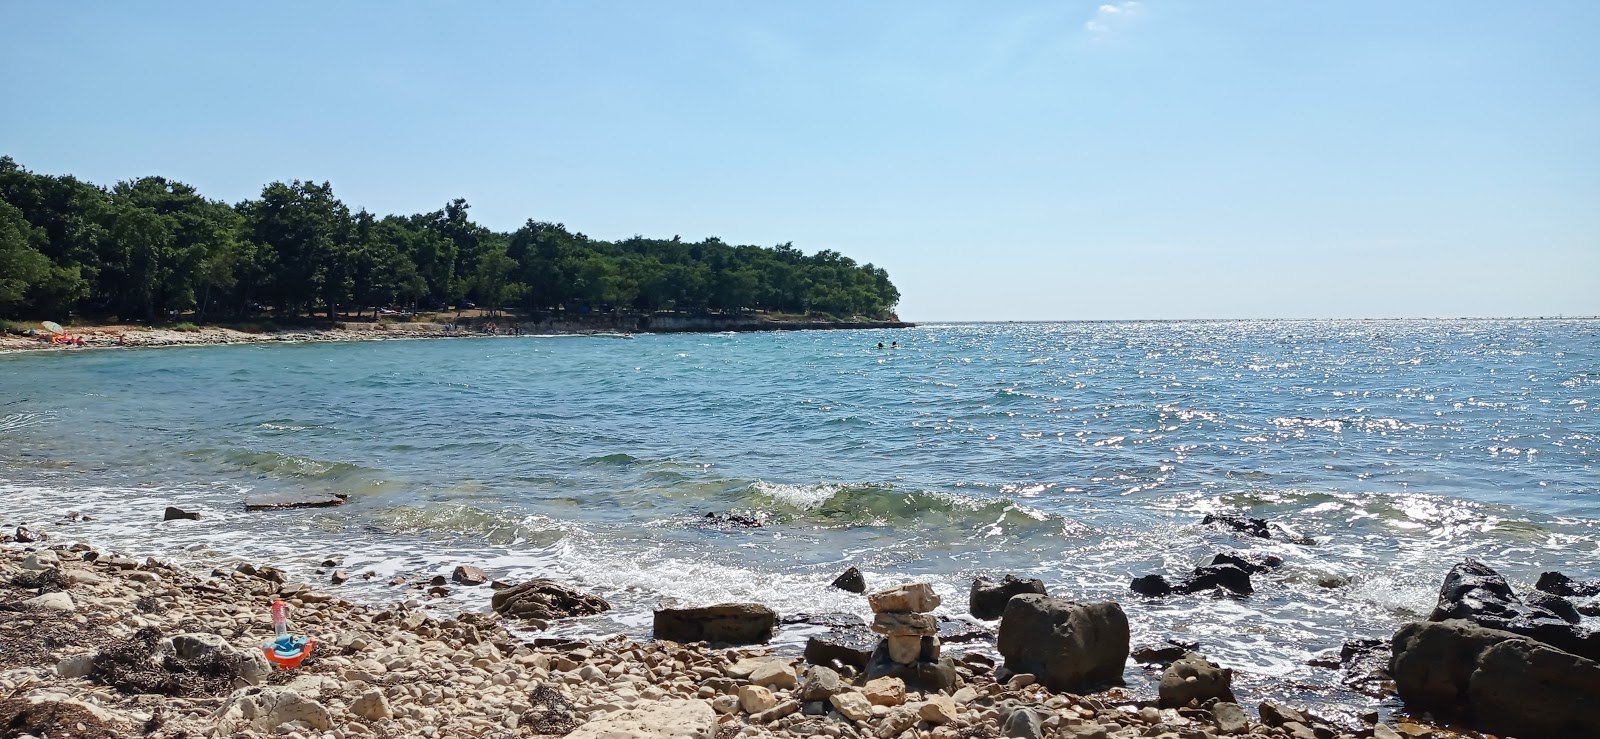 Photo of Plicina beach with spacious bay